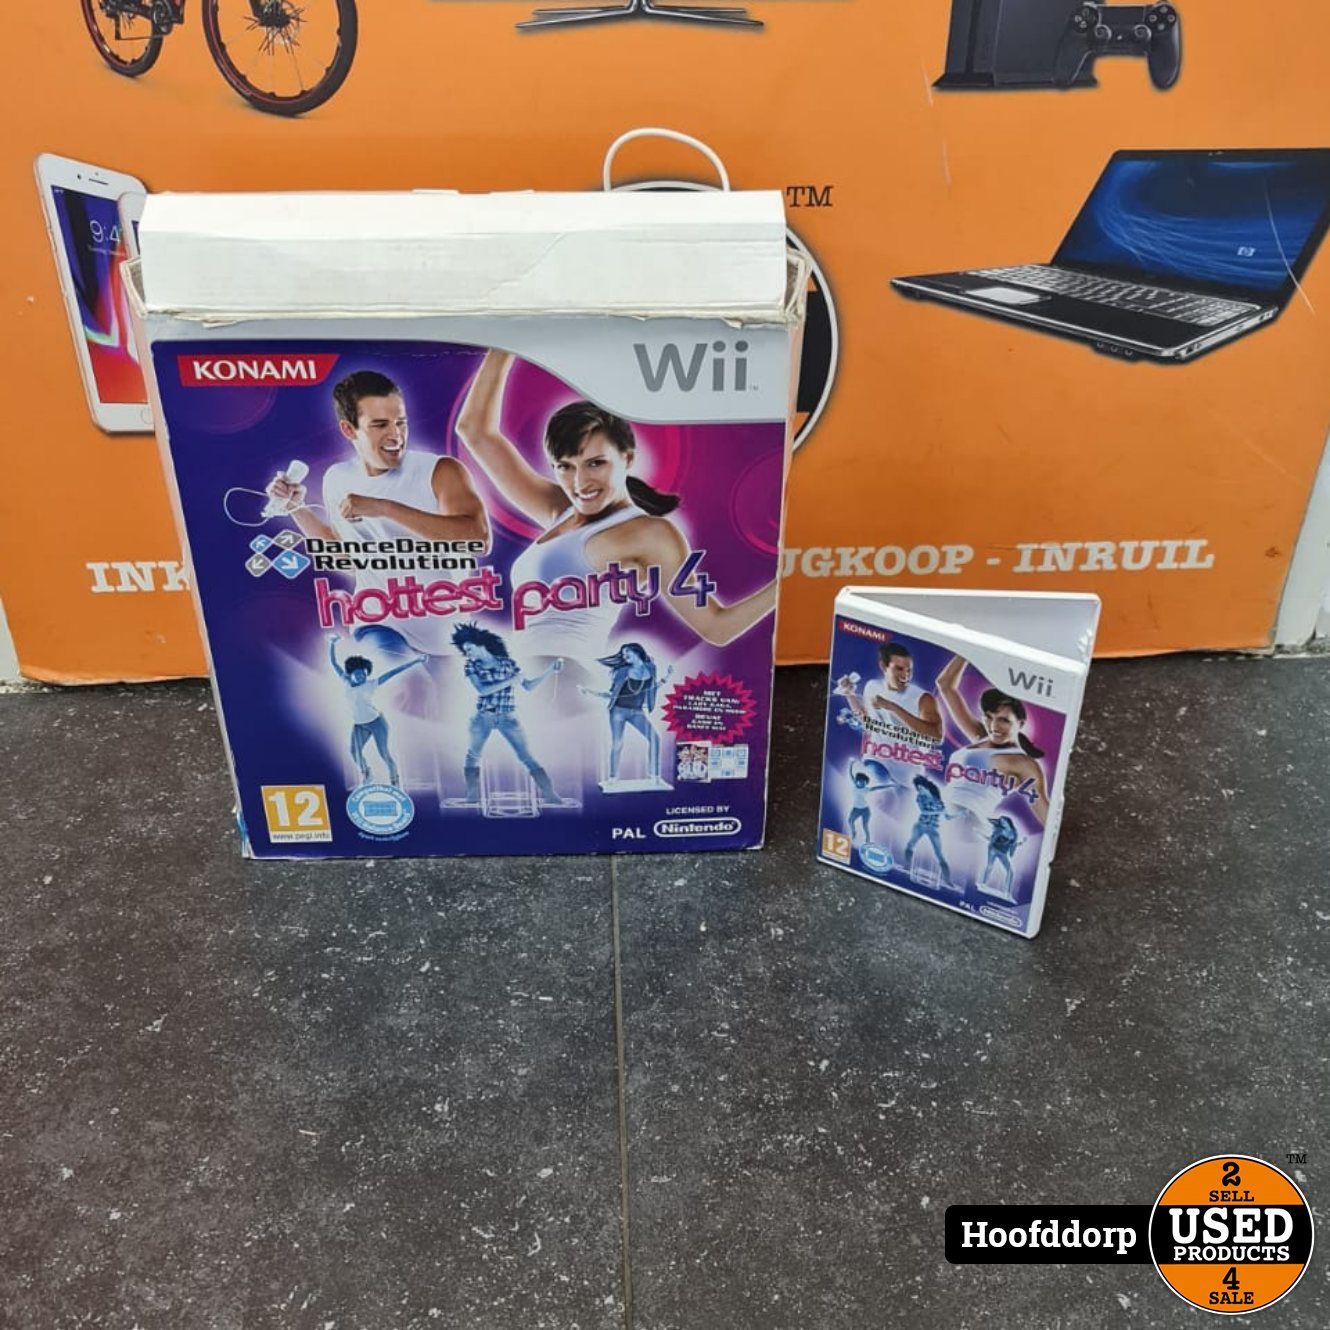 Wii Dansmat in doos met Game - Used Products Hoofddorp